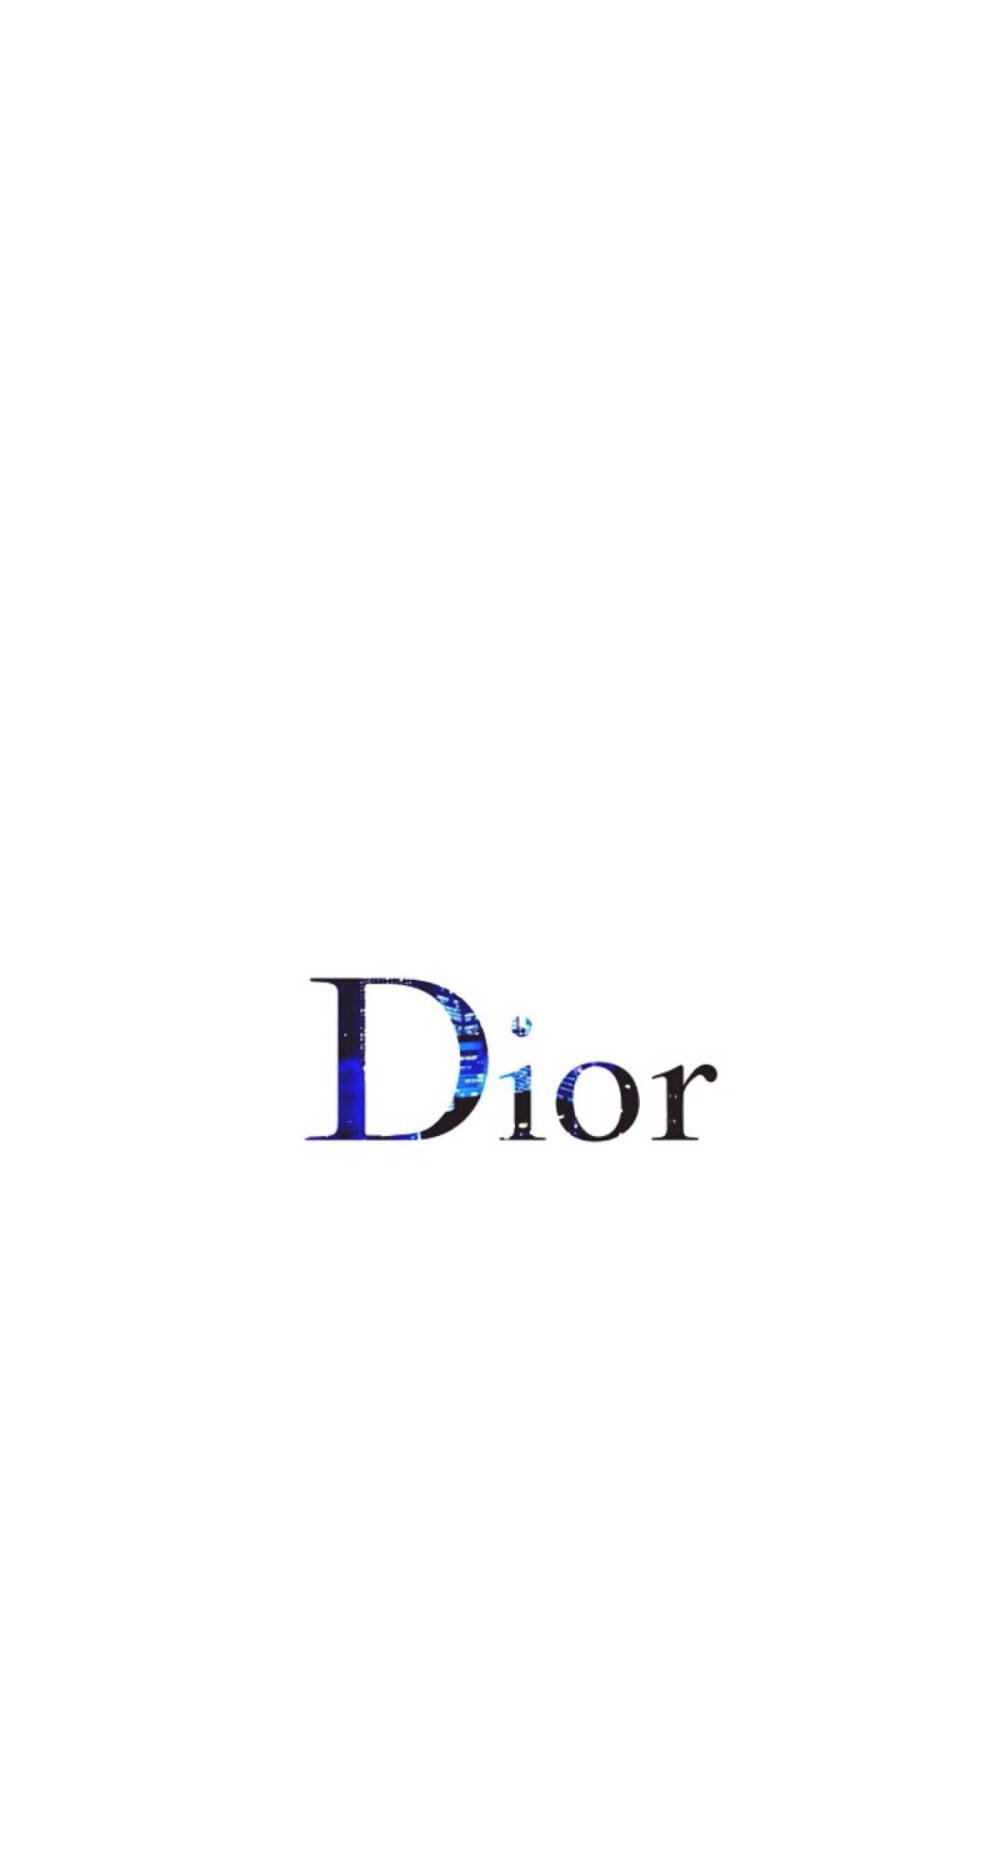 dior壁纸字母图片